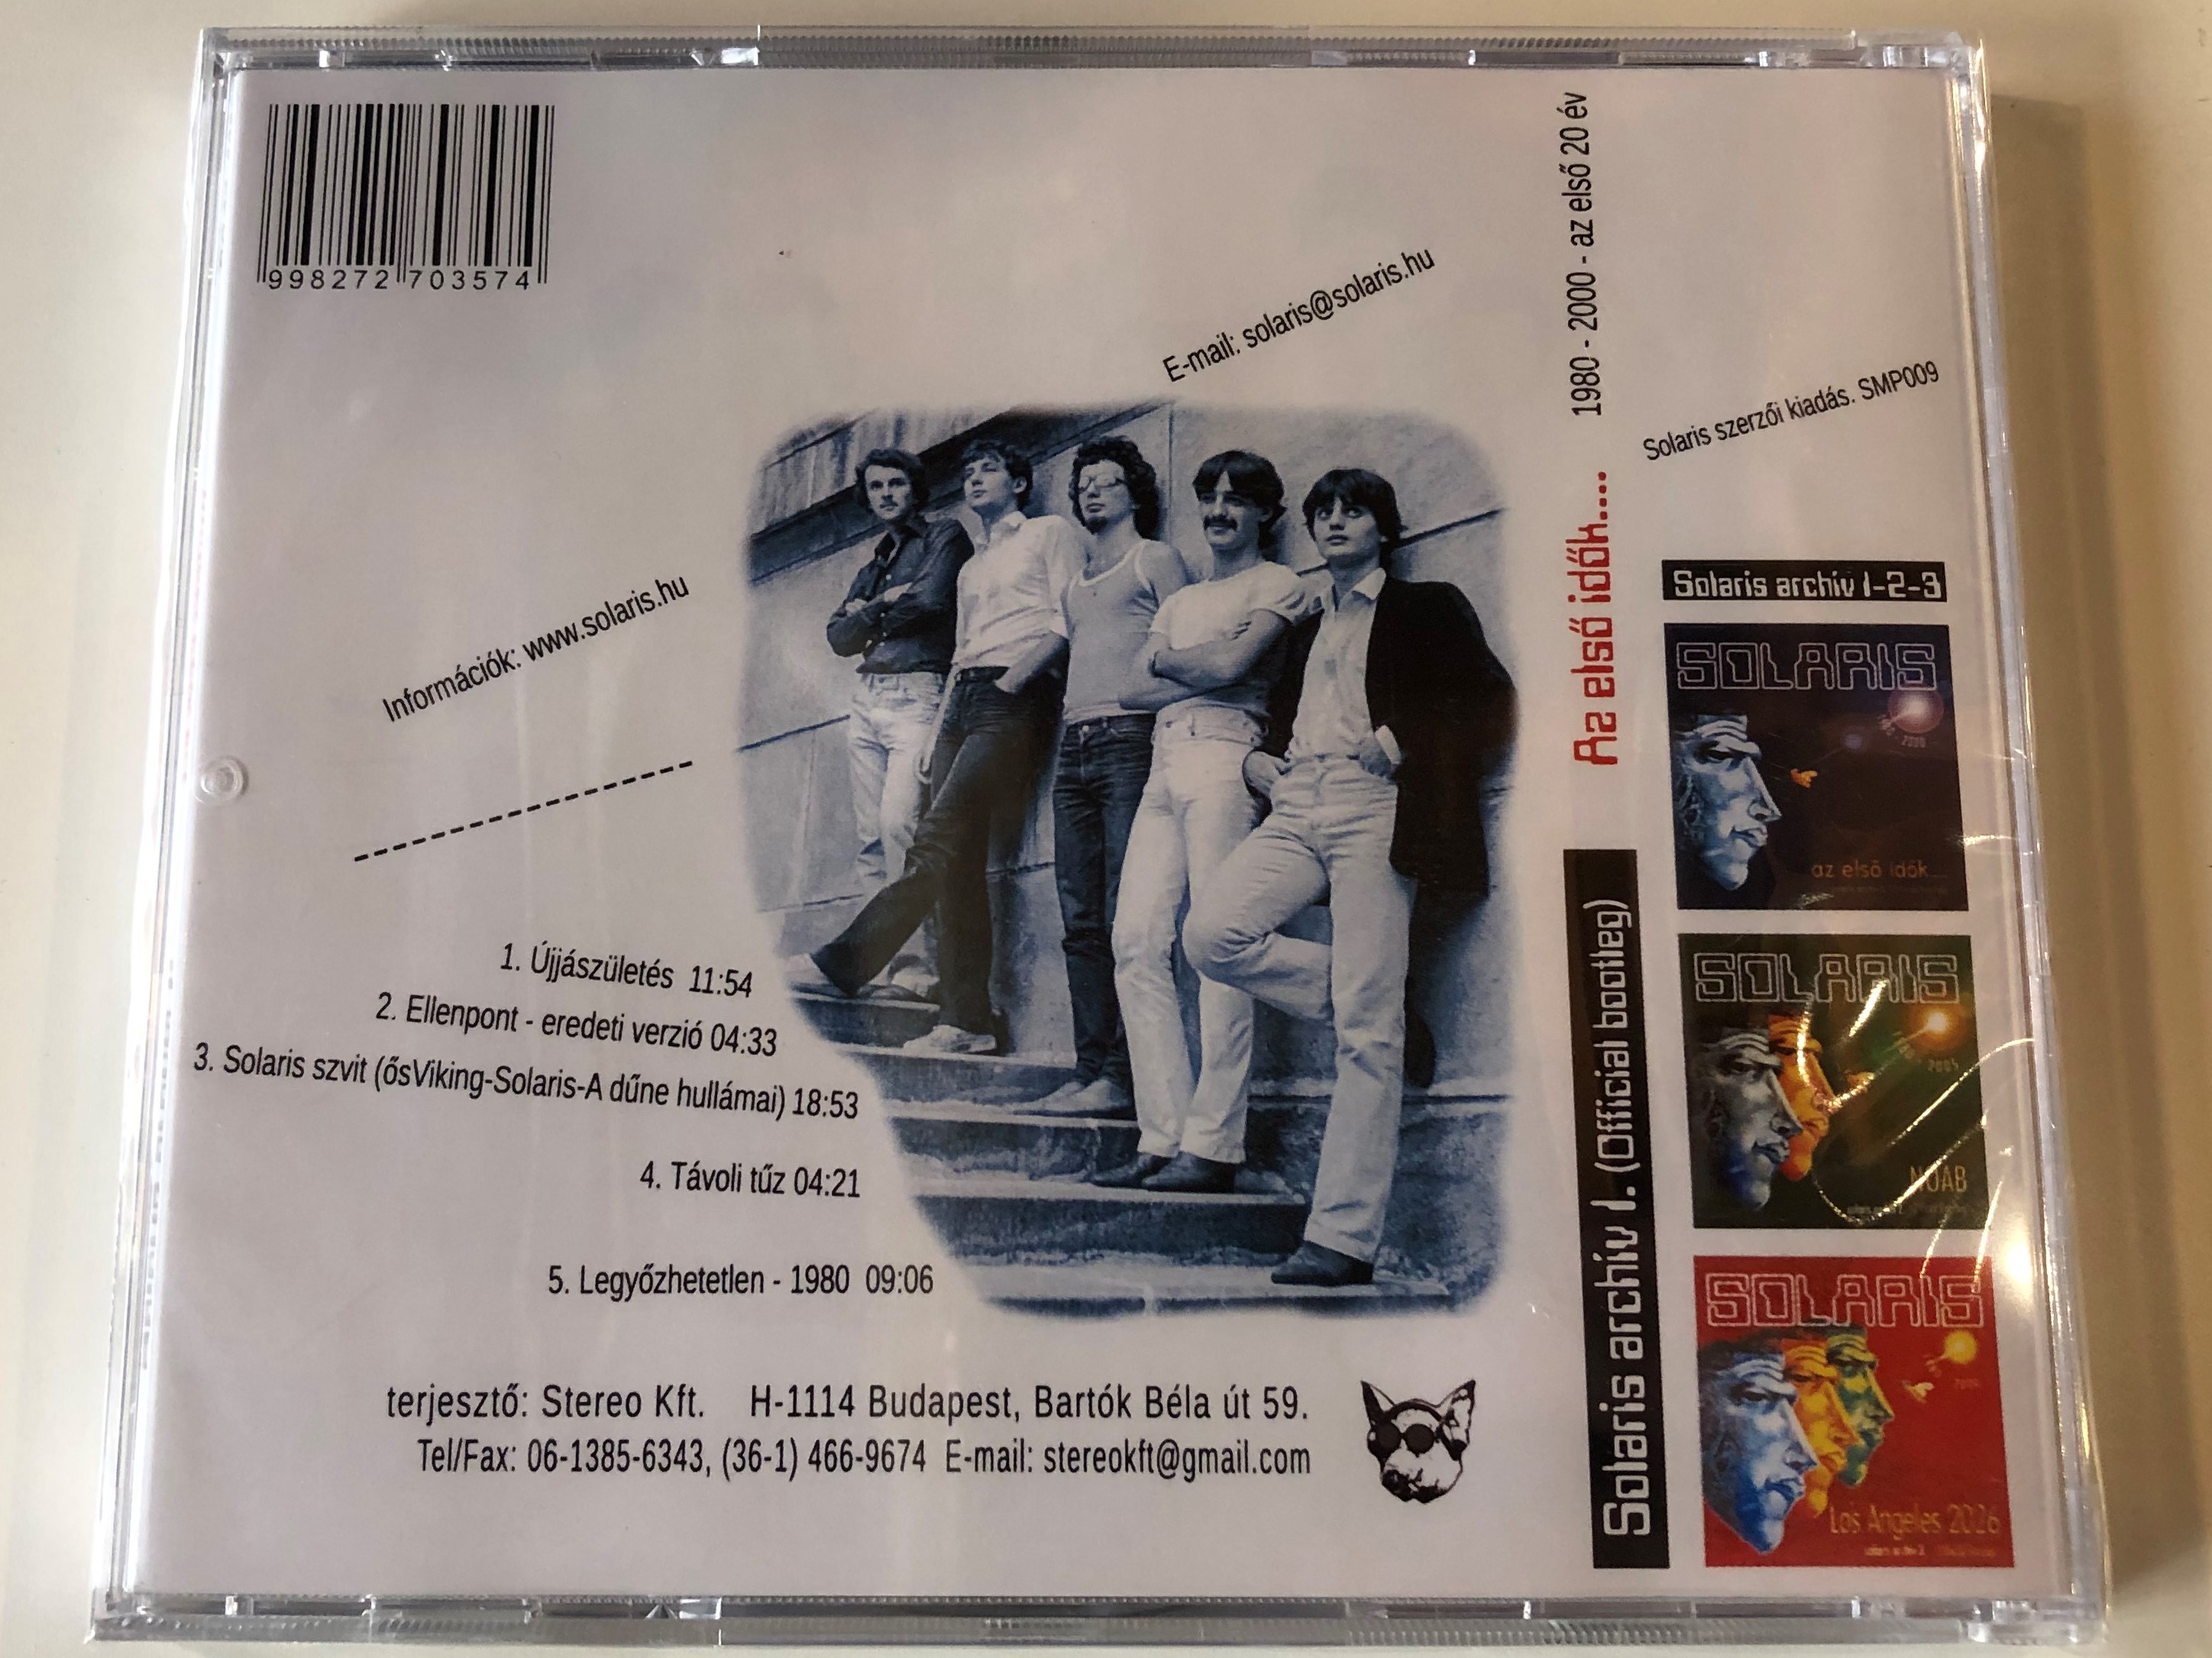 solaris-az-els-id-k...-1980-2000-solaris-archive-1.-official-bootleg-periferic-records-audio-cd-2000-bgcd-059-2-.jpg